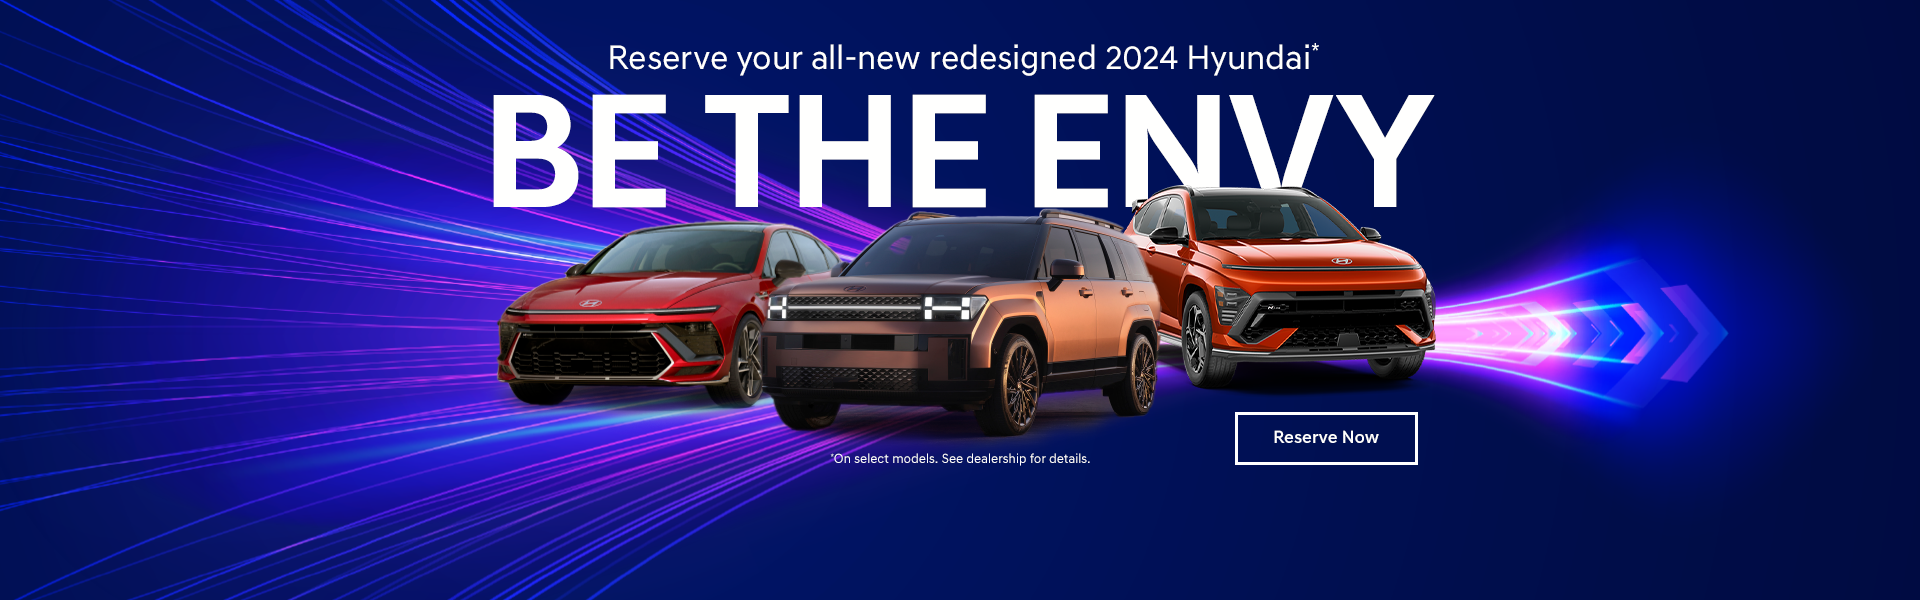 Reserve your 2024 Hyundai